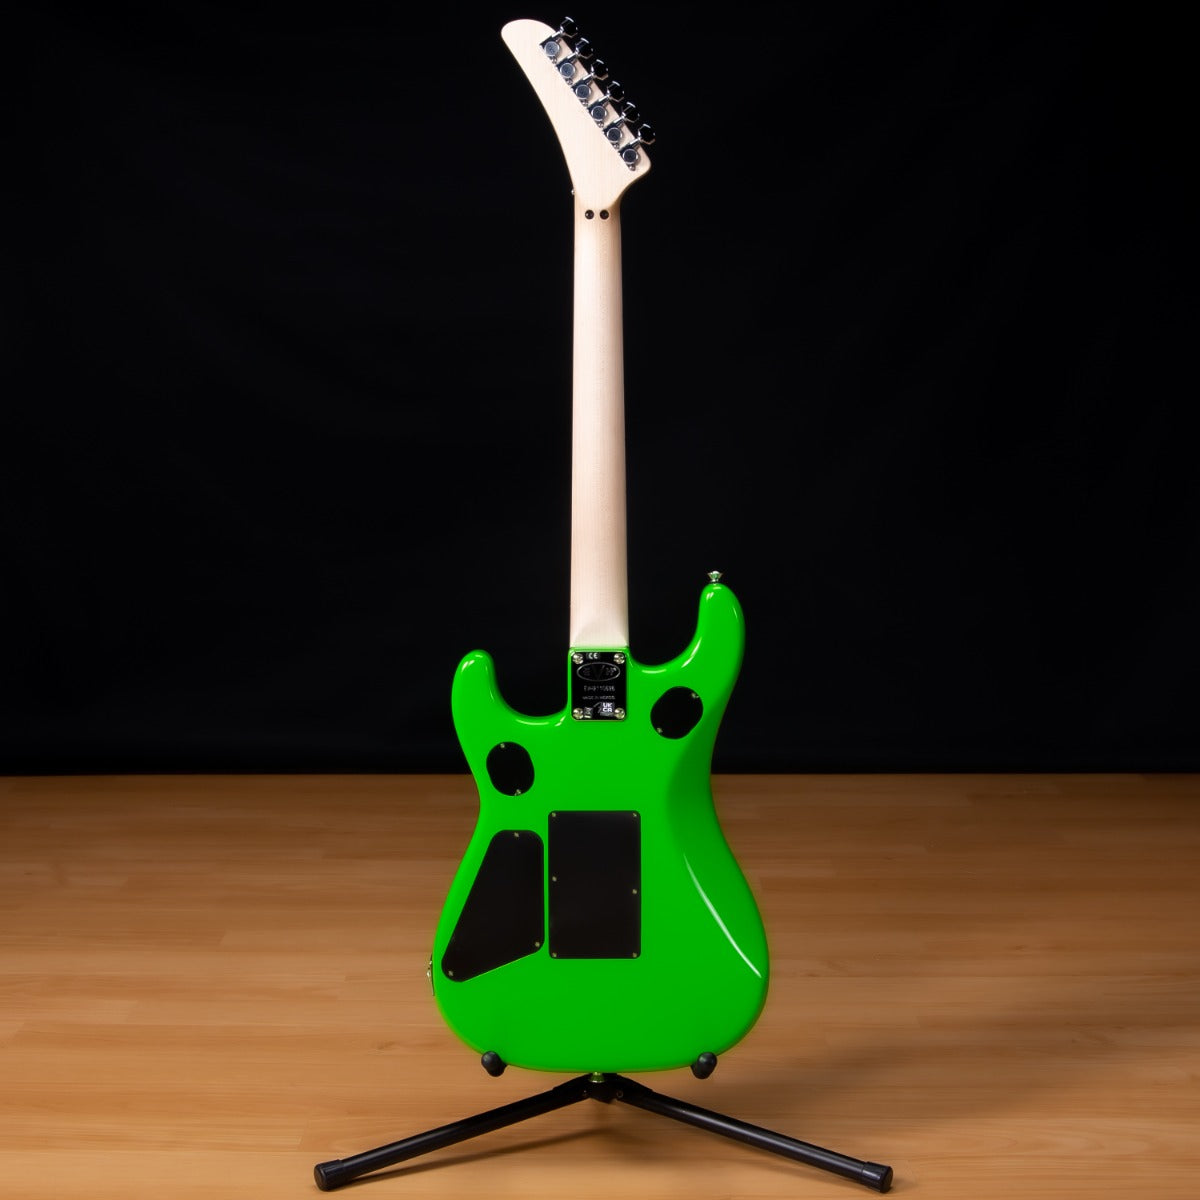 EVH 5150 Series Standard Electric Guitar - Maple, Slime Green view 13